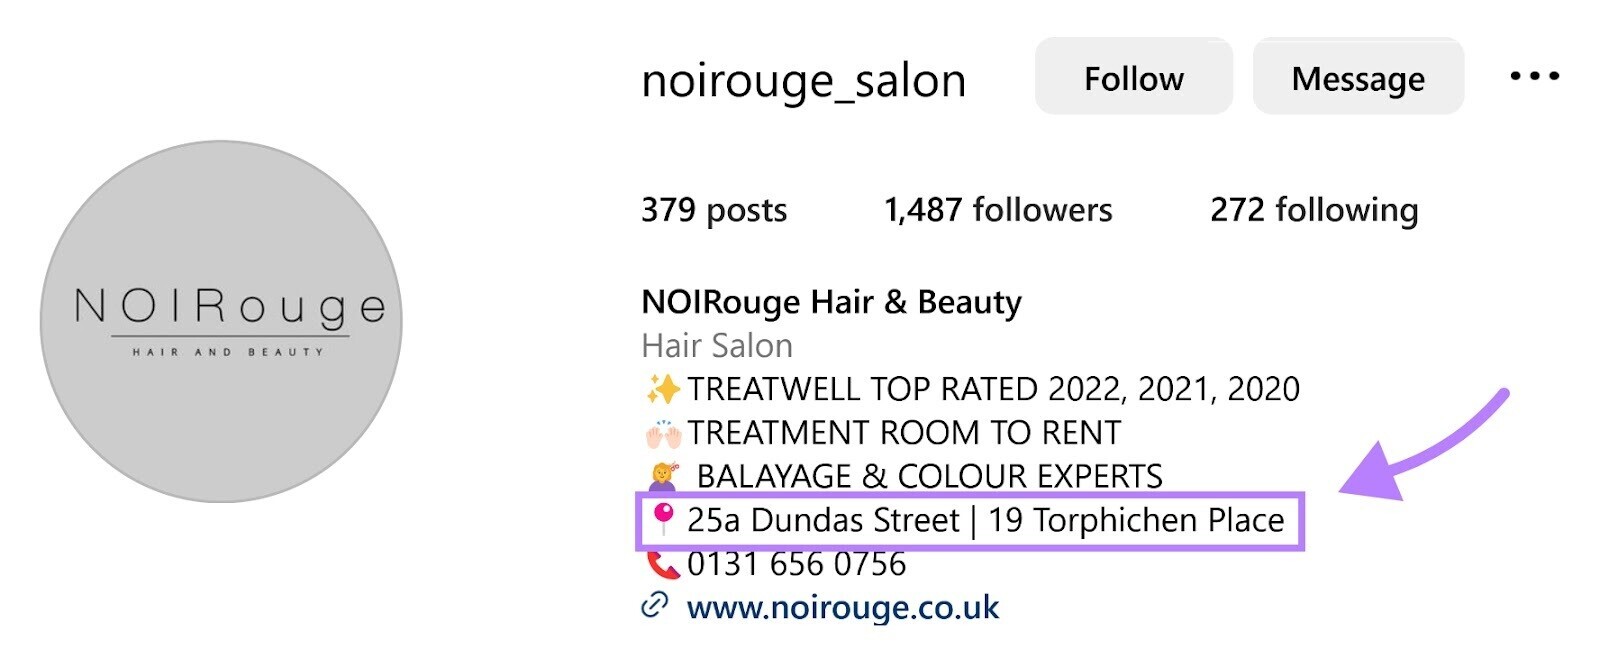 "noirouge_salon" includes their location in their Instagram page bio